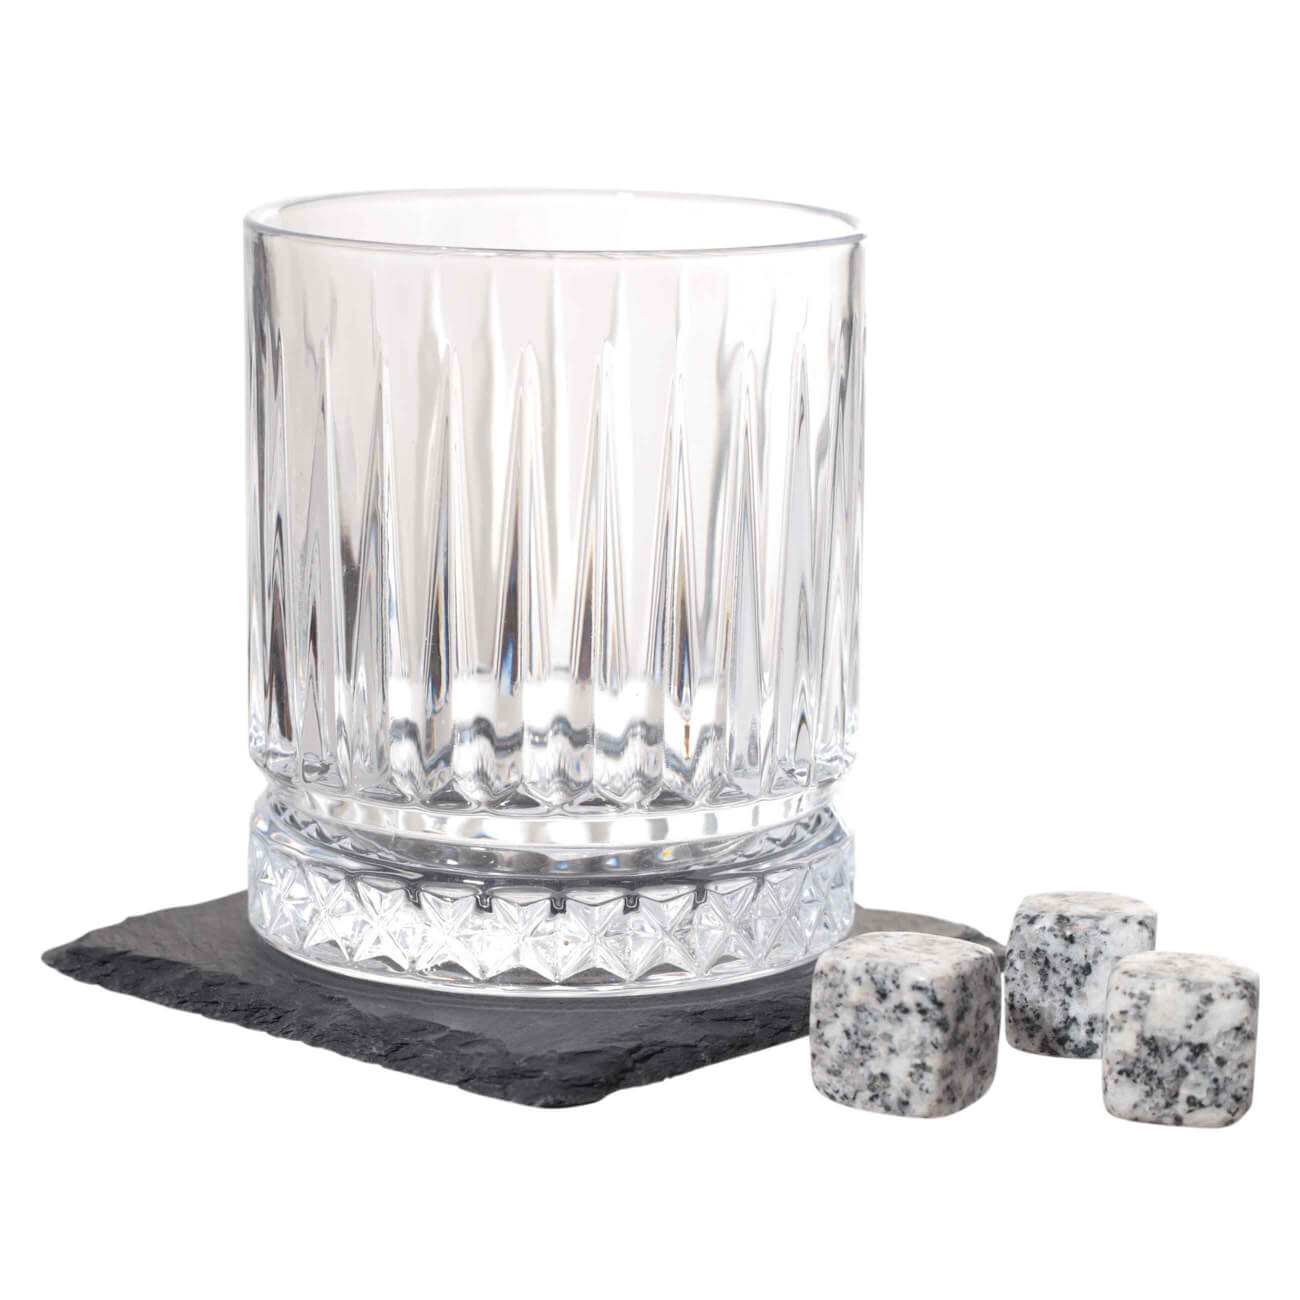 Набор для виски, 1 перс, 5 пр, в коробке, стакан/кубики/подставка, стекло/мрамор/сланец, Bar набор для виски 1 перс 5 пр в коробке стакан кубики подставка стекло мрамор сланец bar